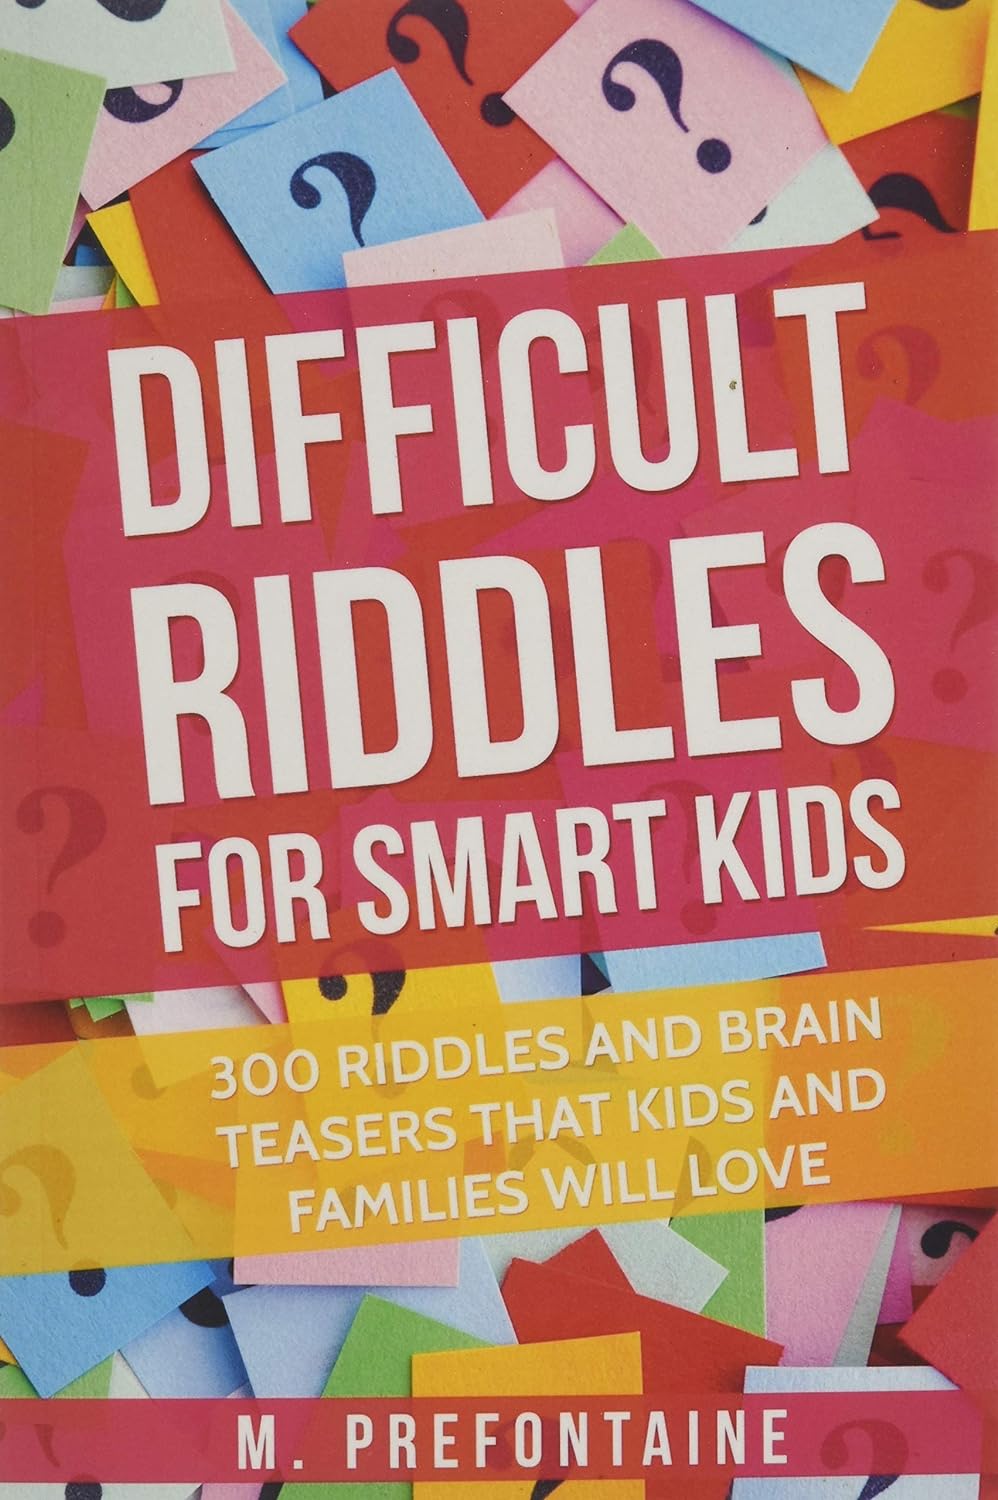 Easter basket ideas for tween boys: "Difficult Riddles for Smart Kids"